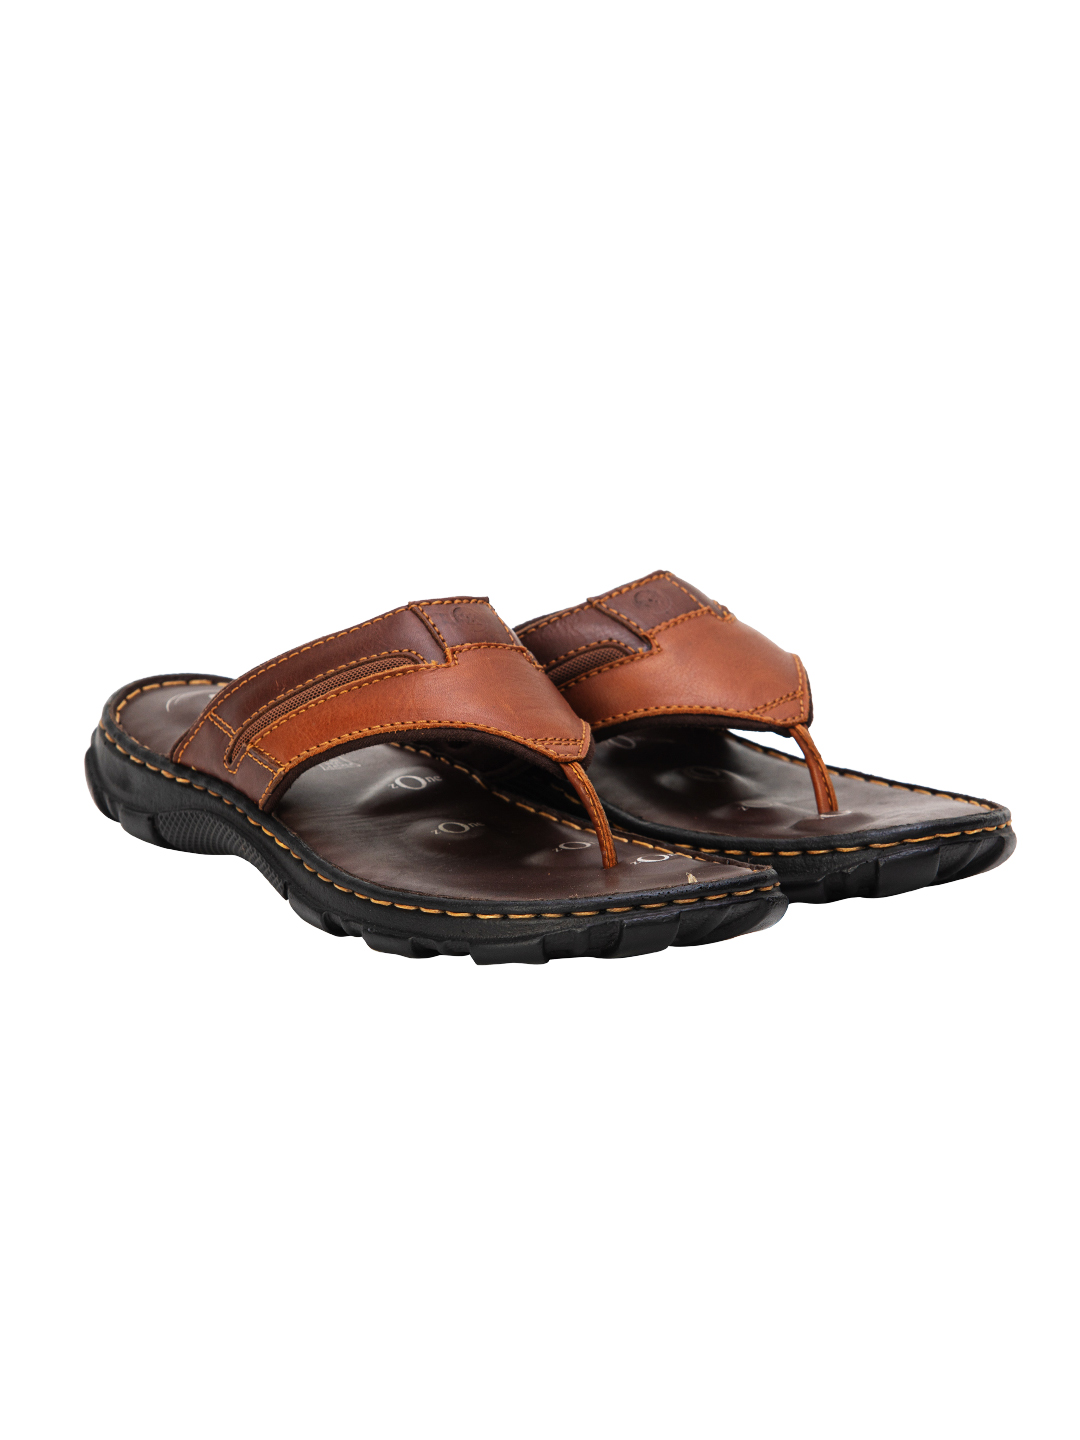 Buy Von Wellx Germany Comfort Brown Colton Slippers Online in Chandigarh